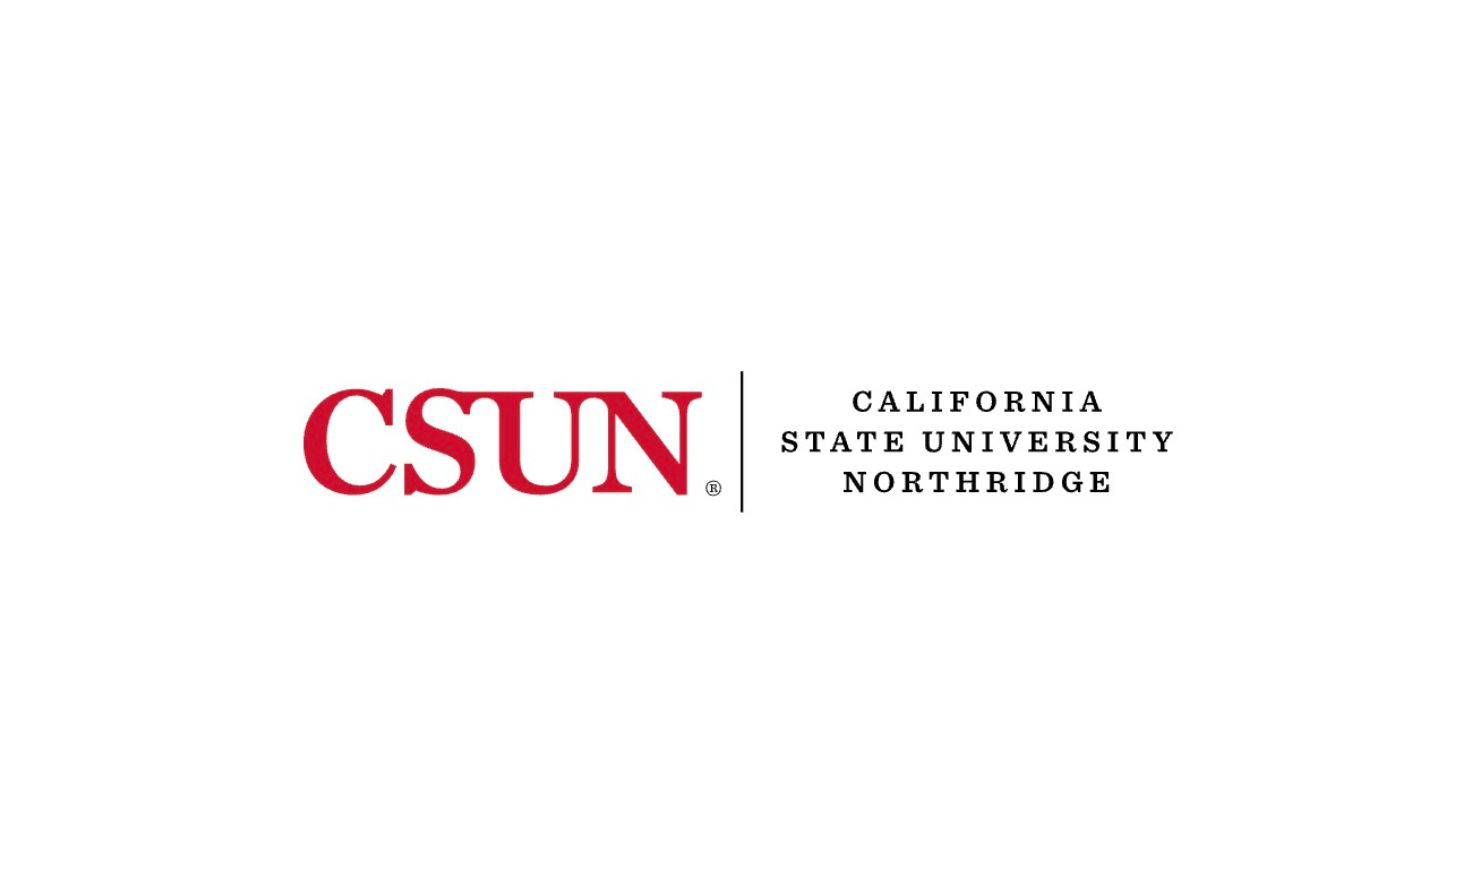 CSUN CALIFORNIA STATE UNIVERSITY NORTHRIDGE